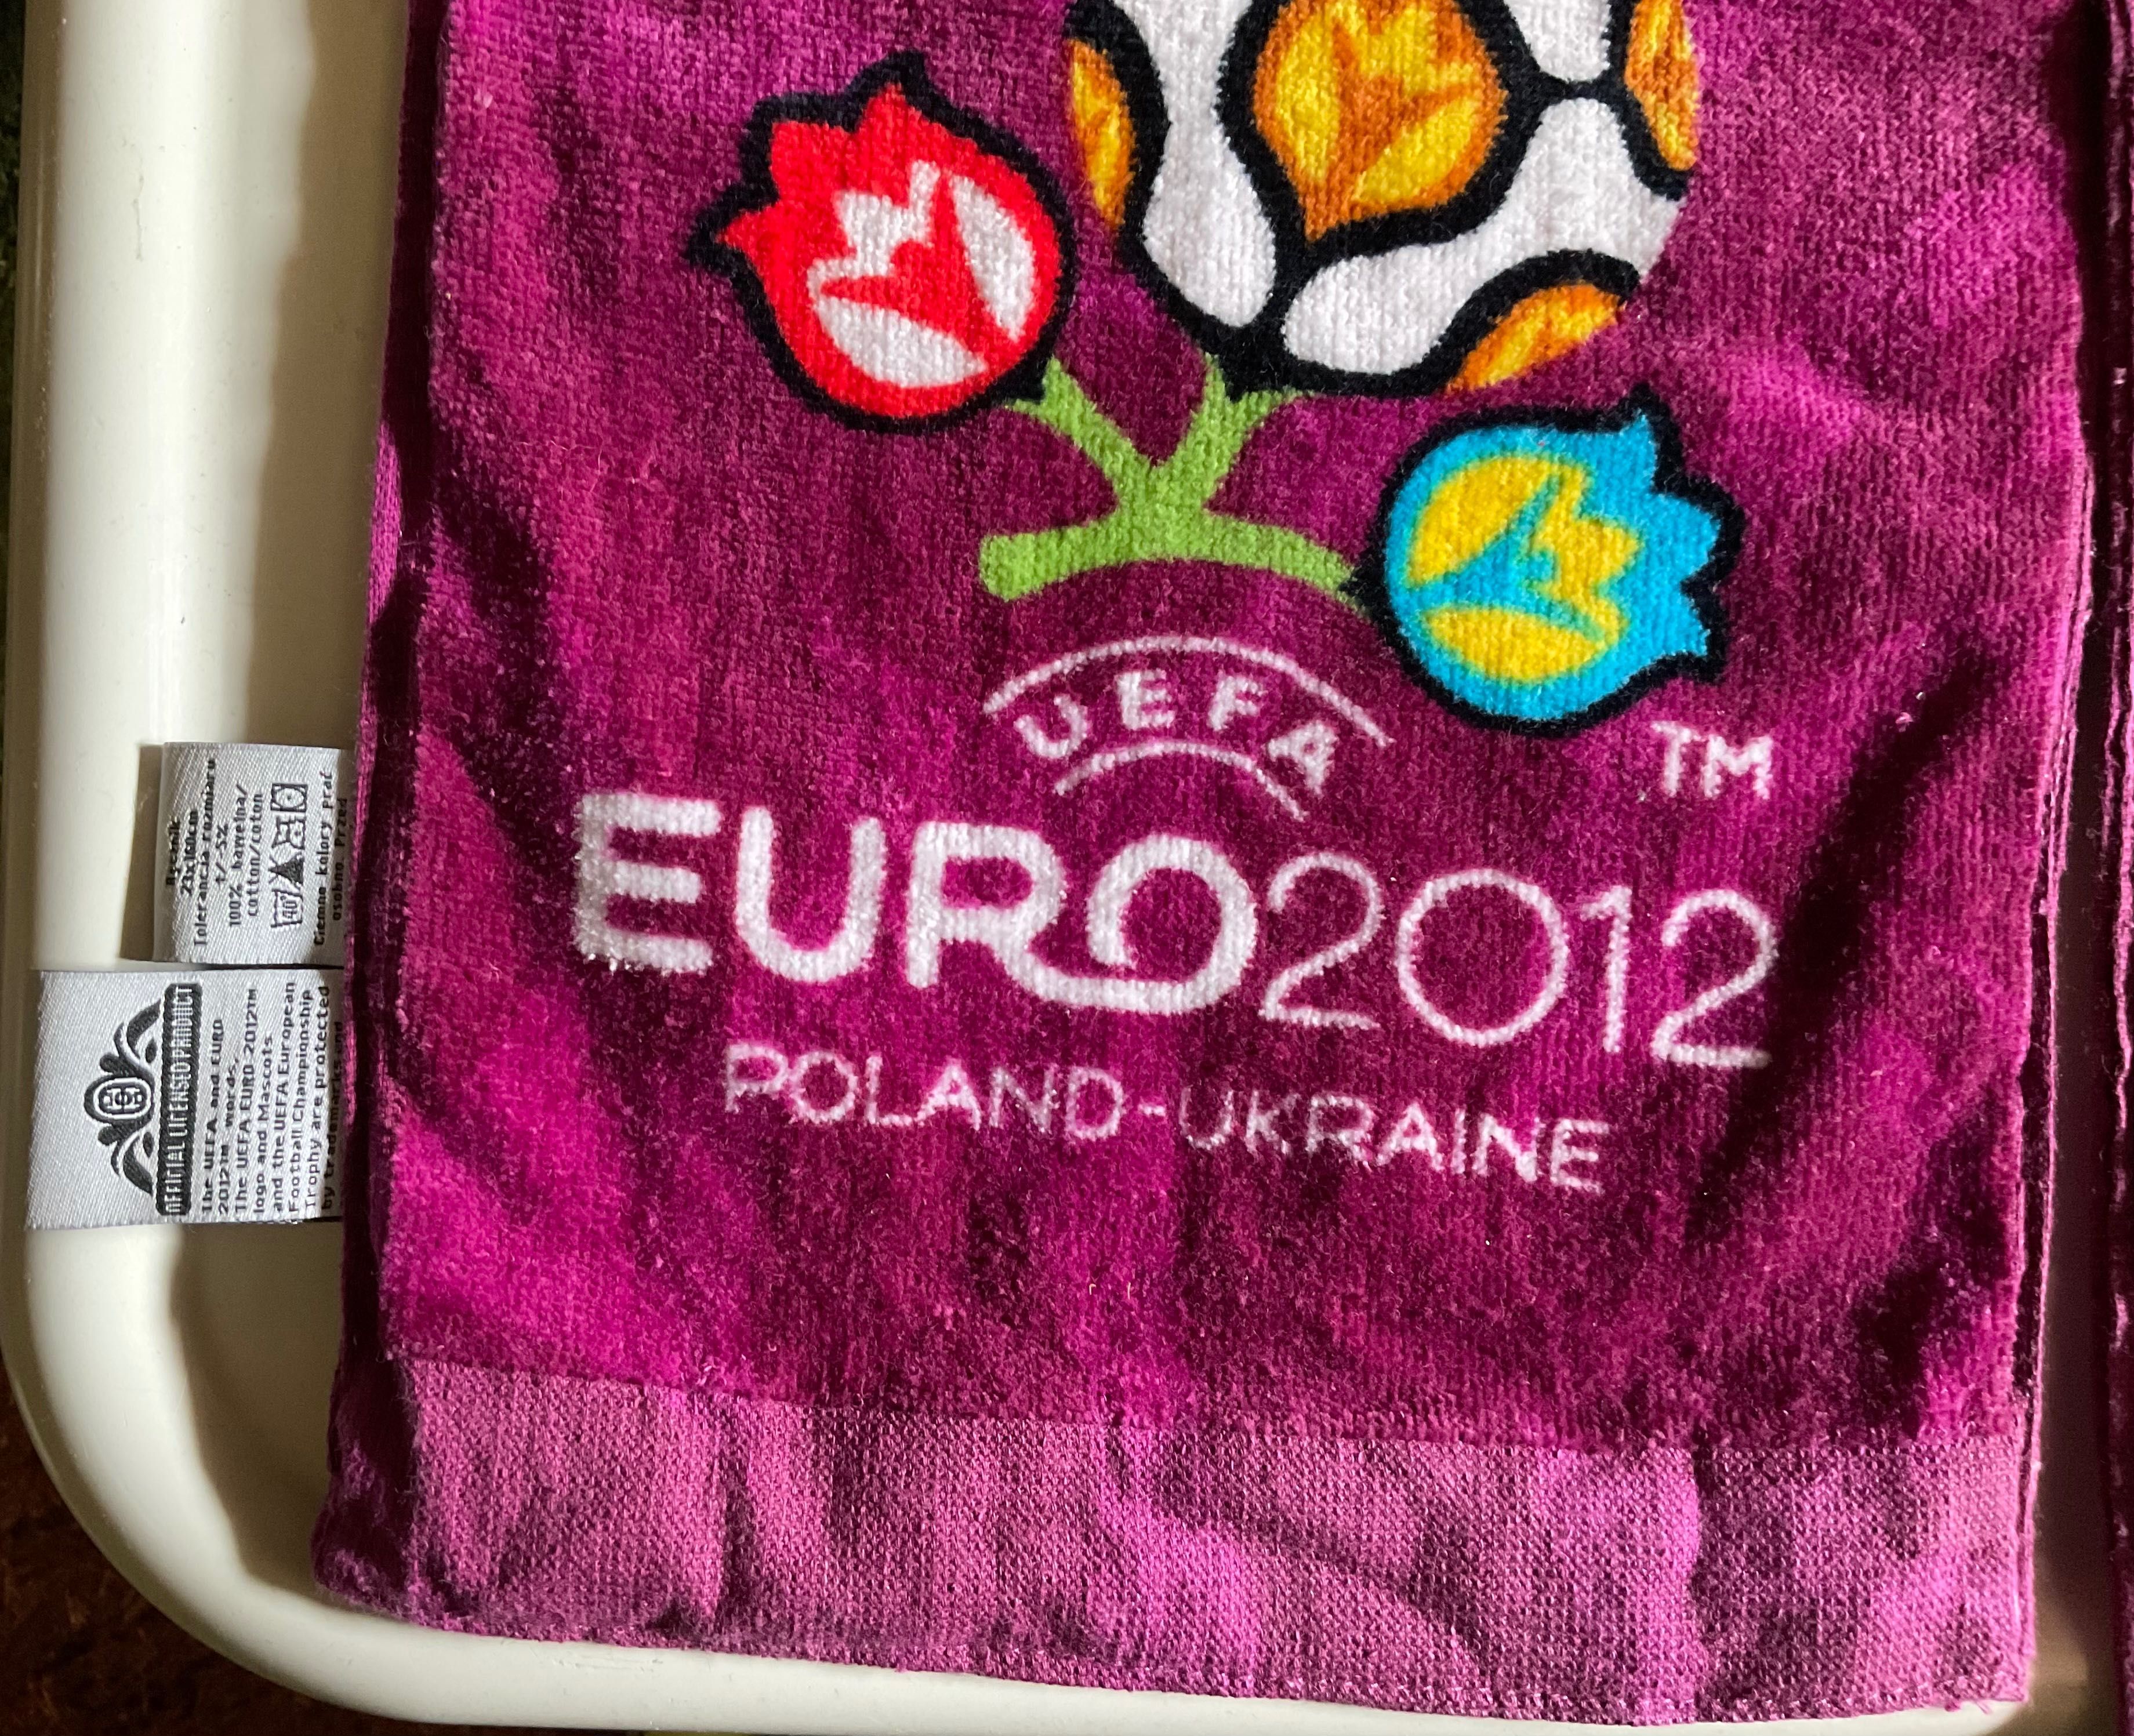 Euro 2012 szalik - ręcznik Polska-Ukraina